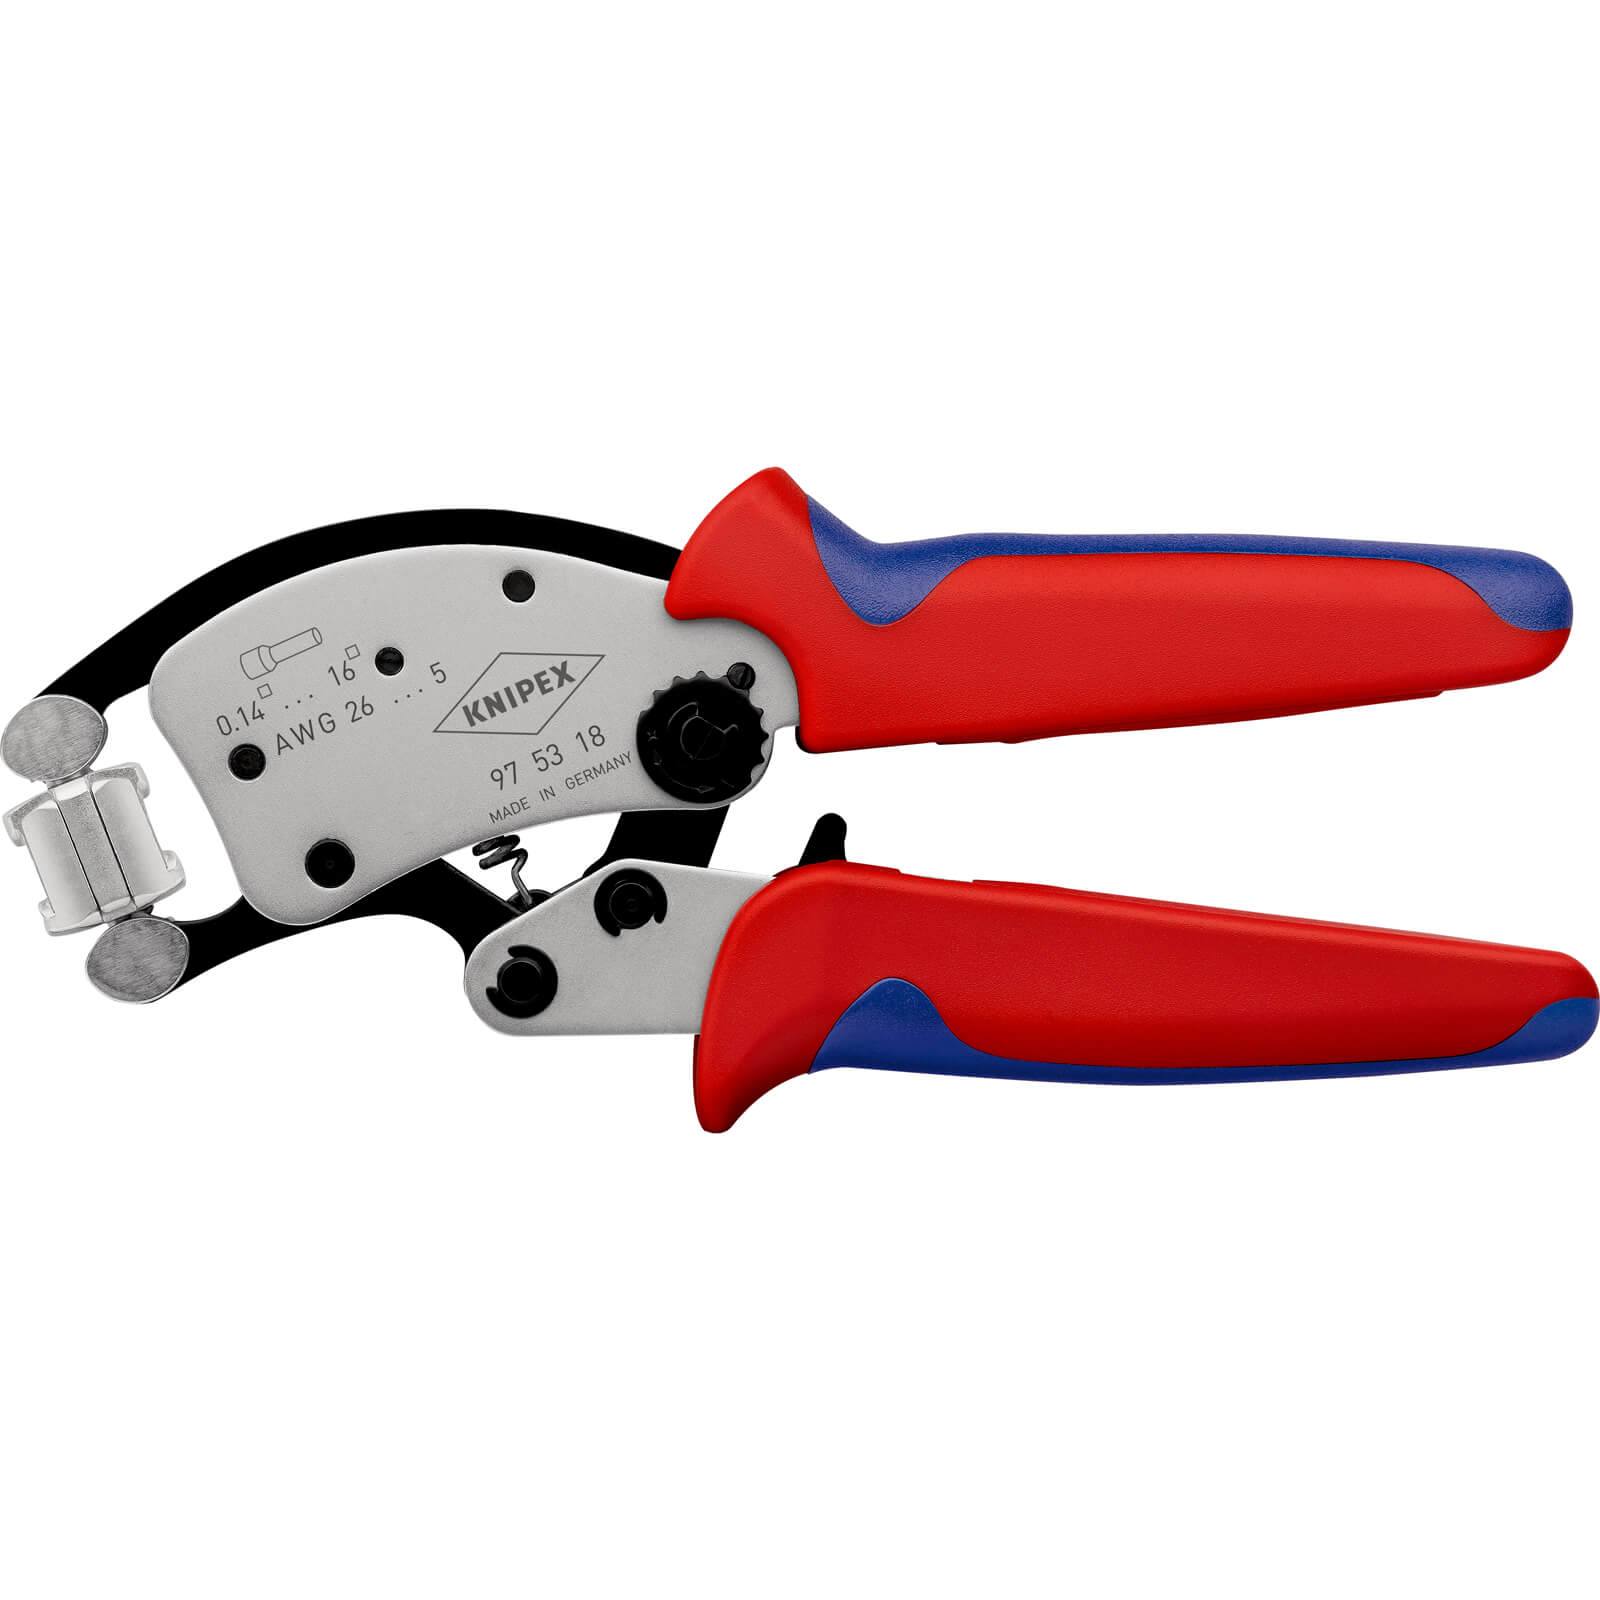 Knipex 97 53 Twistor16 Self Adjusting Crimping Pliers